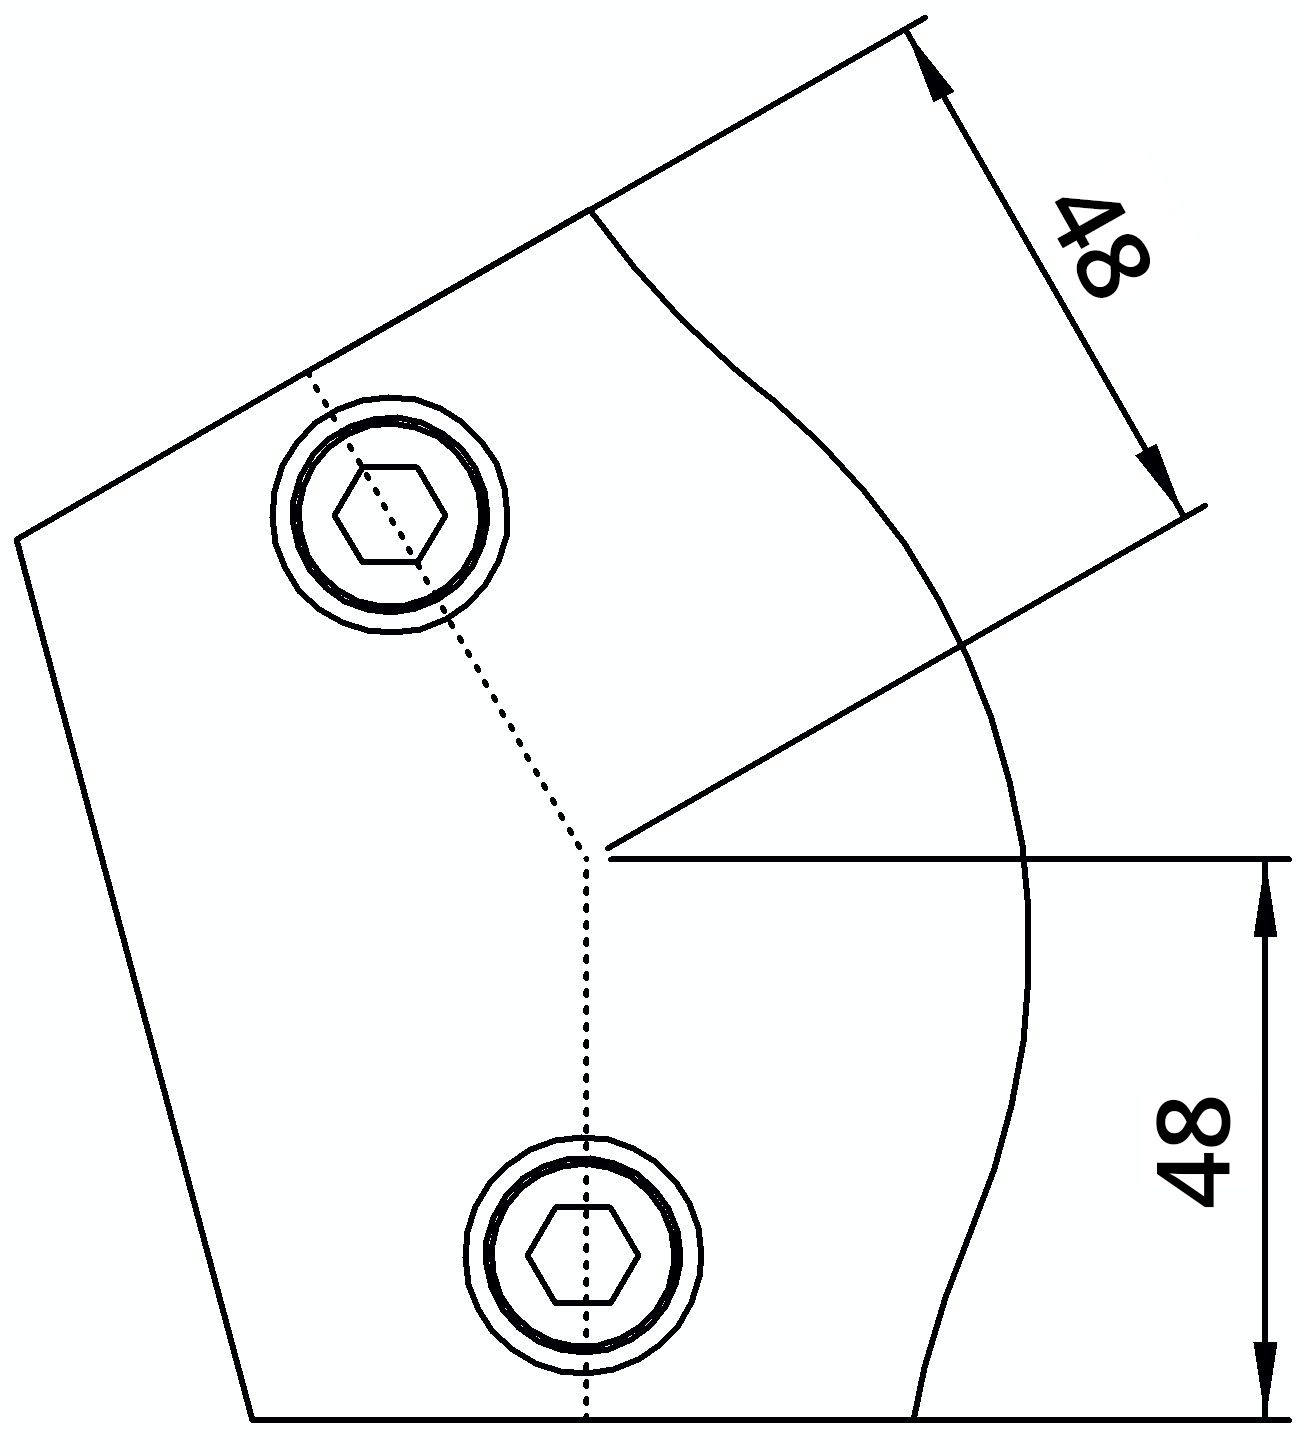 Rohrverbinder | Bogen variabel 15-60° | 124C42 | 42,4 mm | 1 1/4" | Feuerverzinkt u. Elektrogalvanisiert